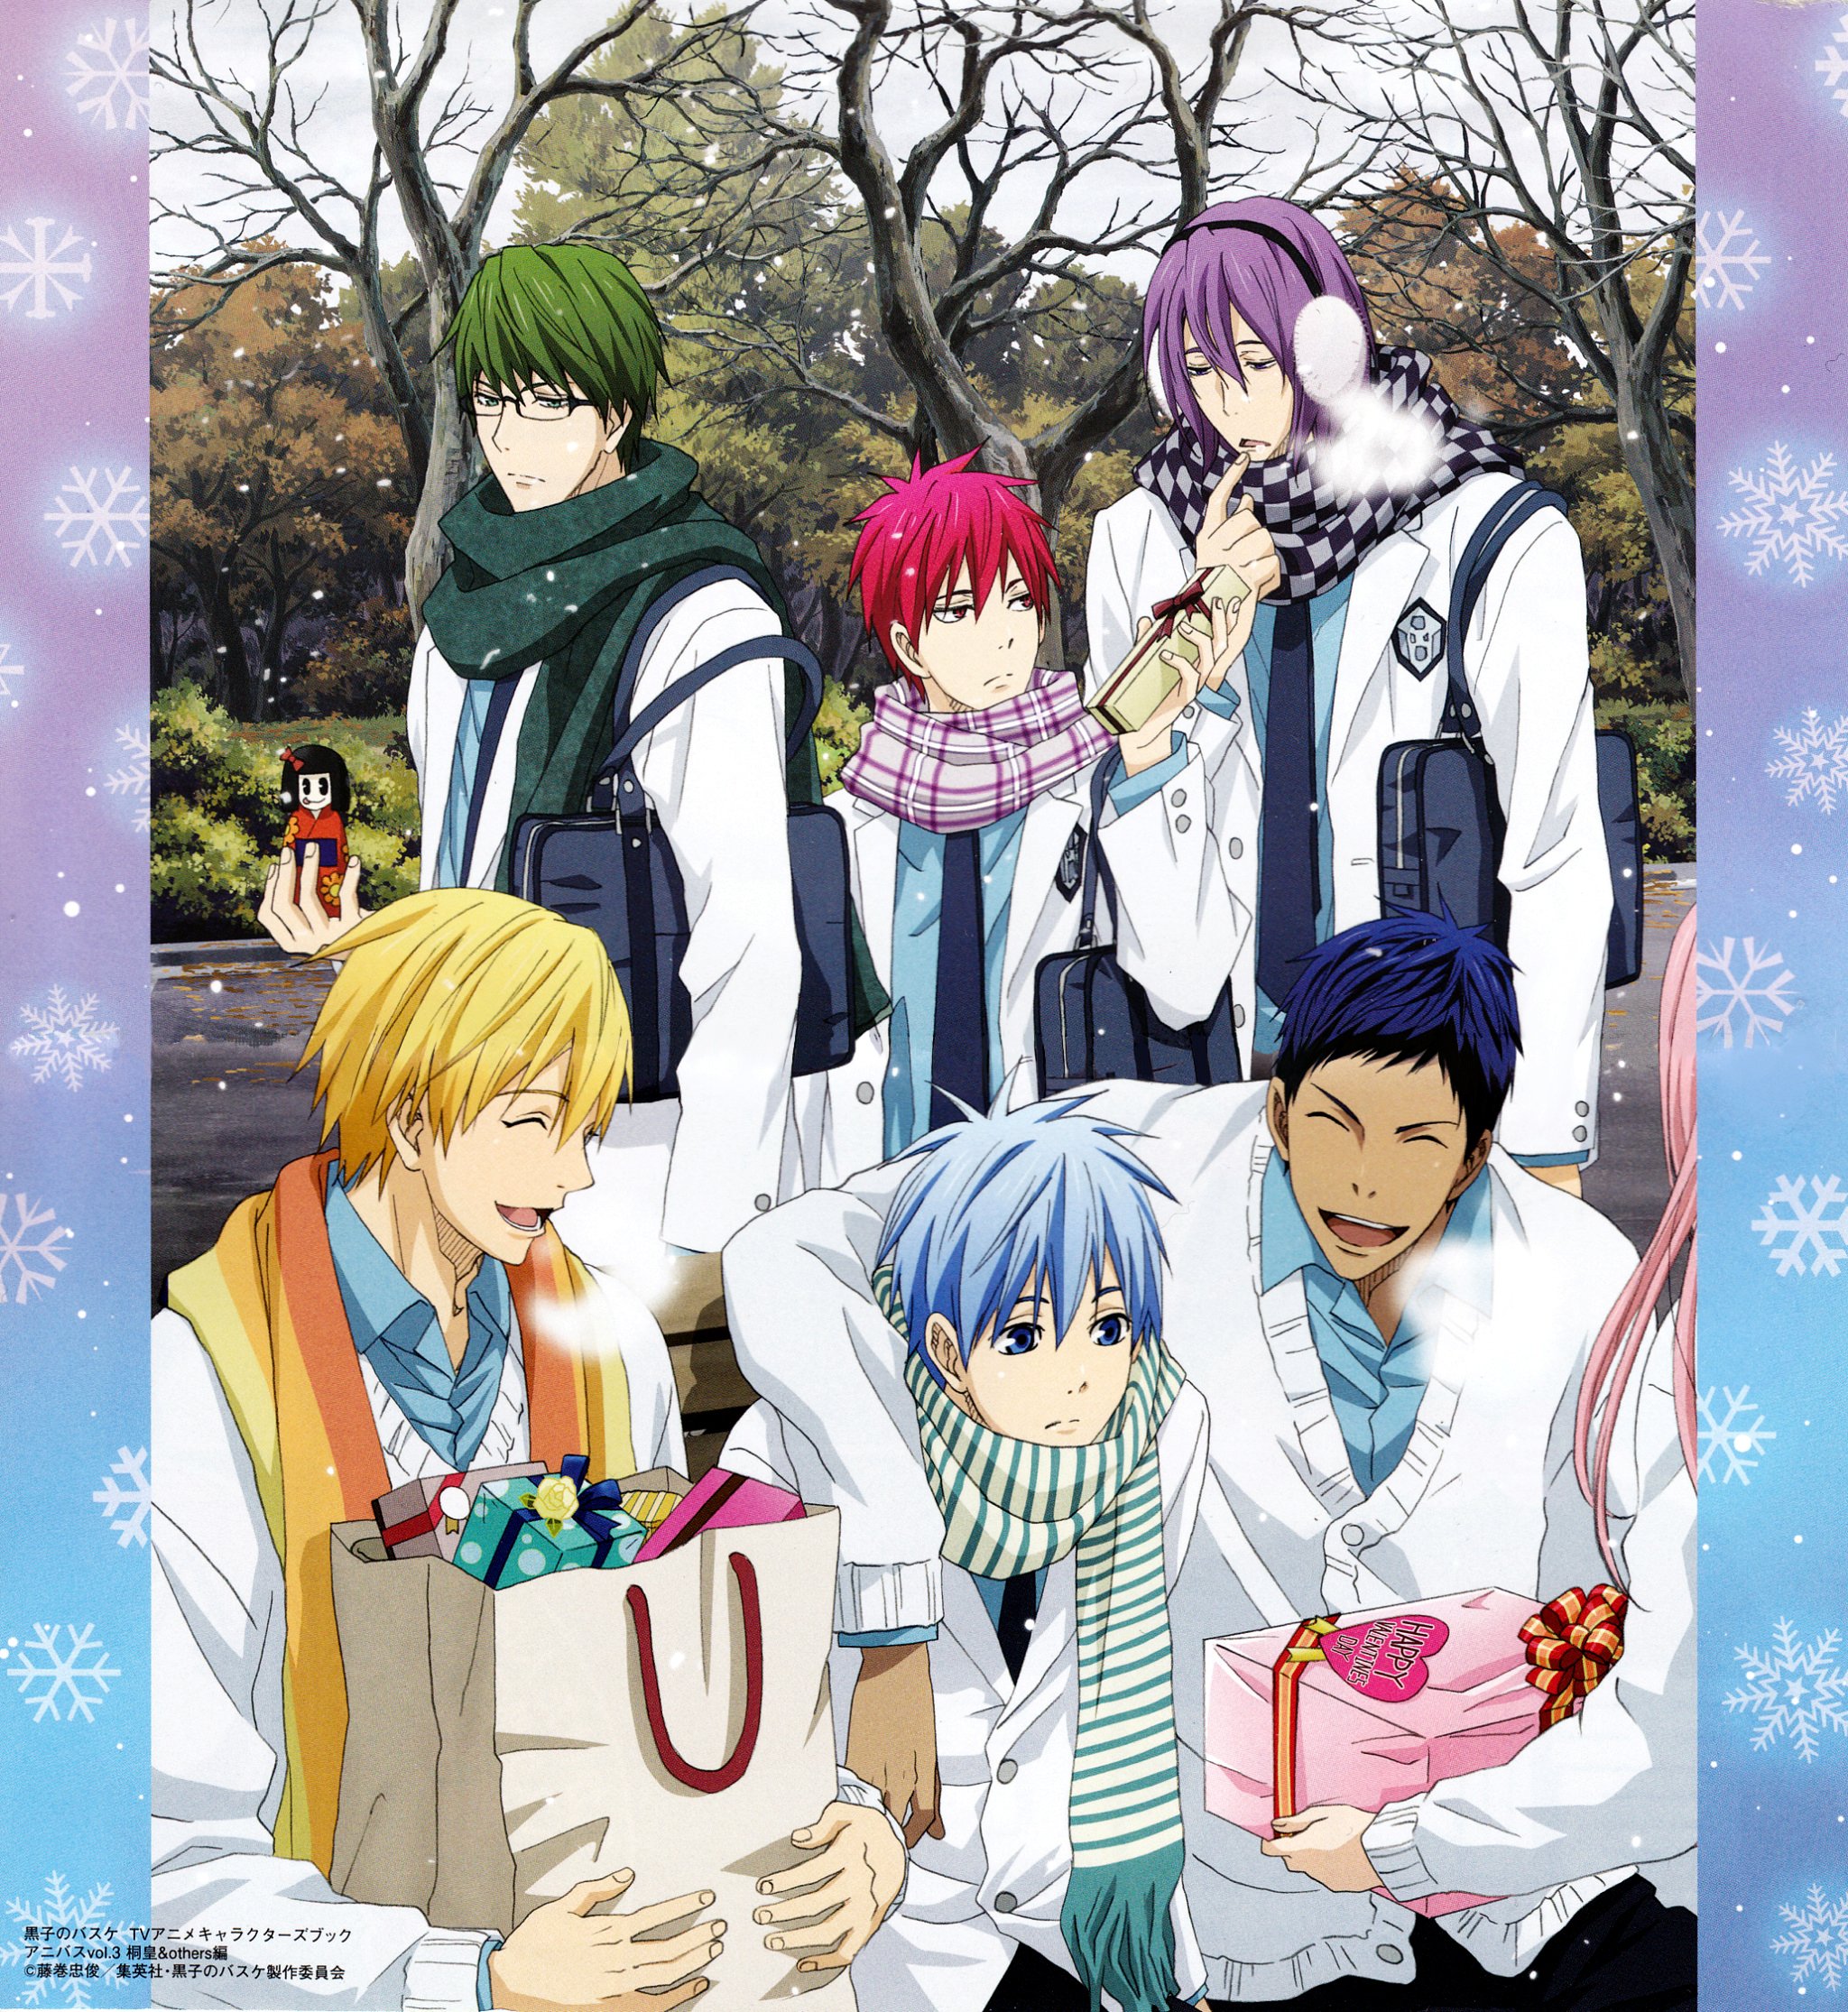 kuroko, No, Basket, Handsets, Cool, Boys, Anime, Series, Snow, Tree Wallpaper